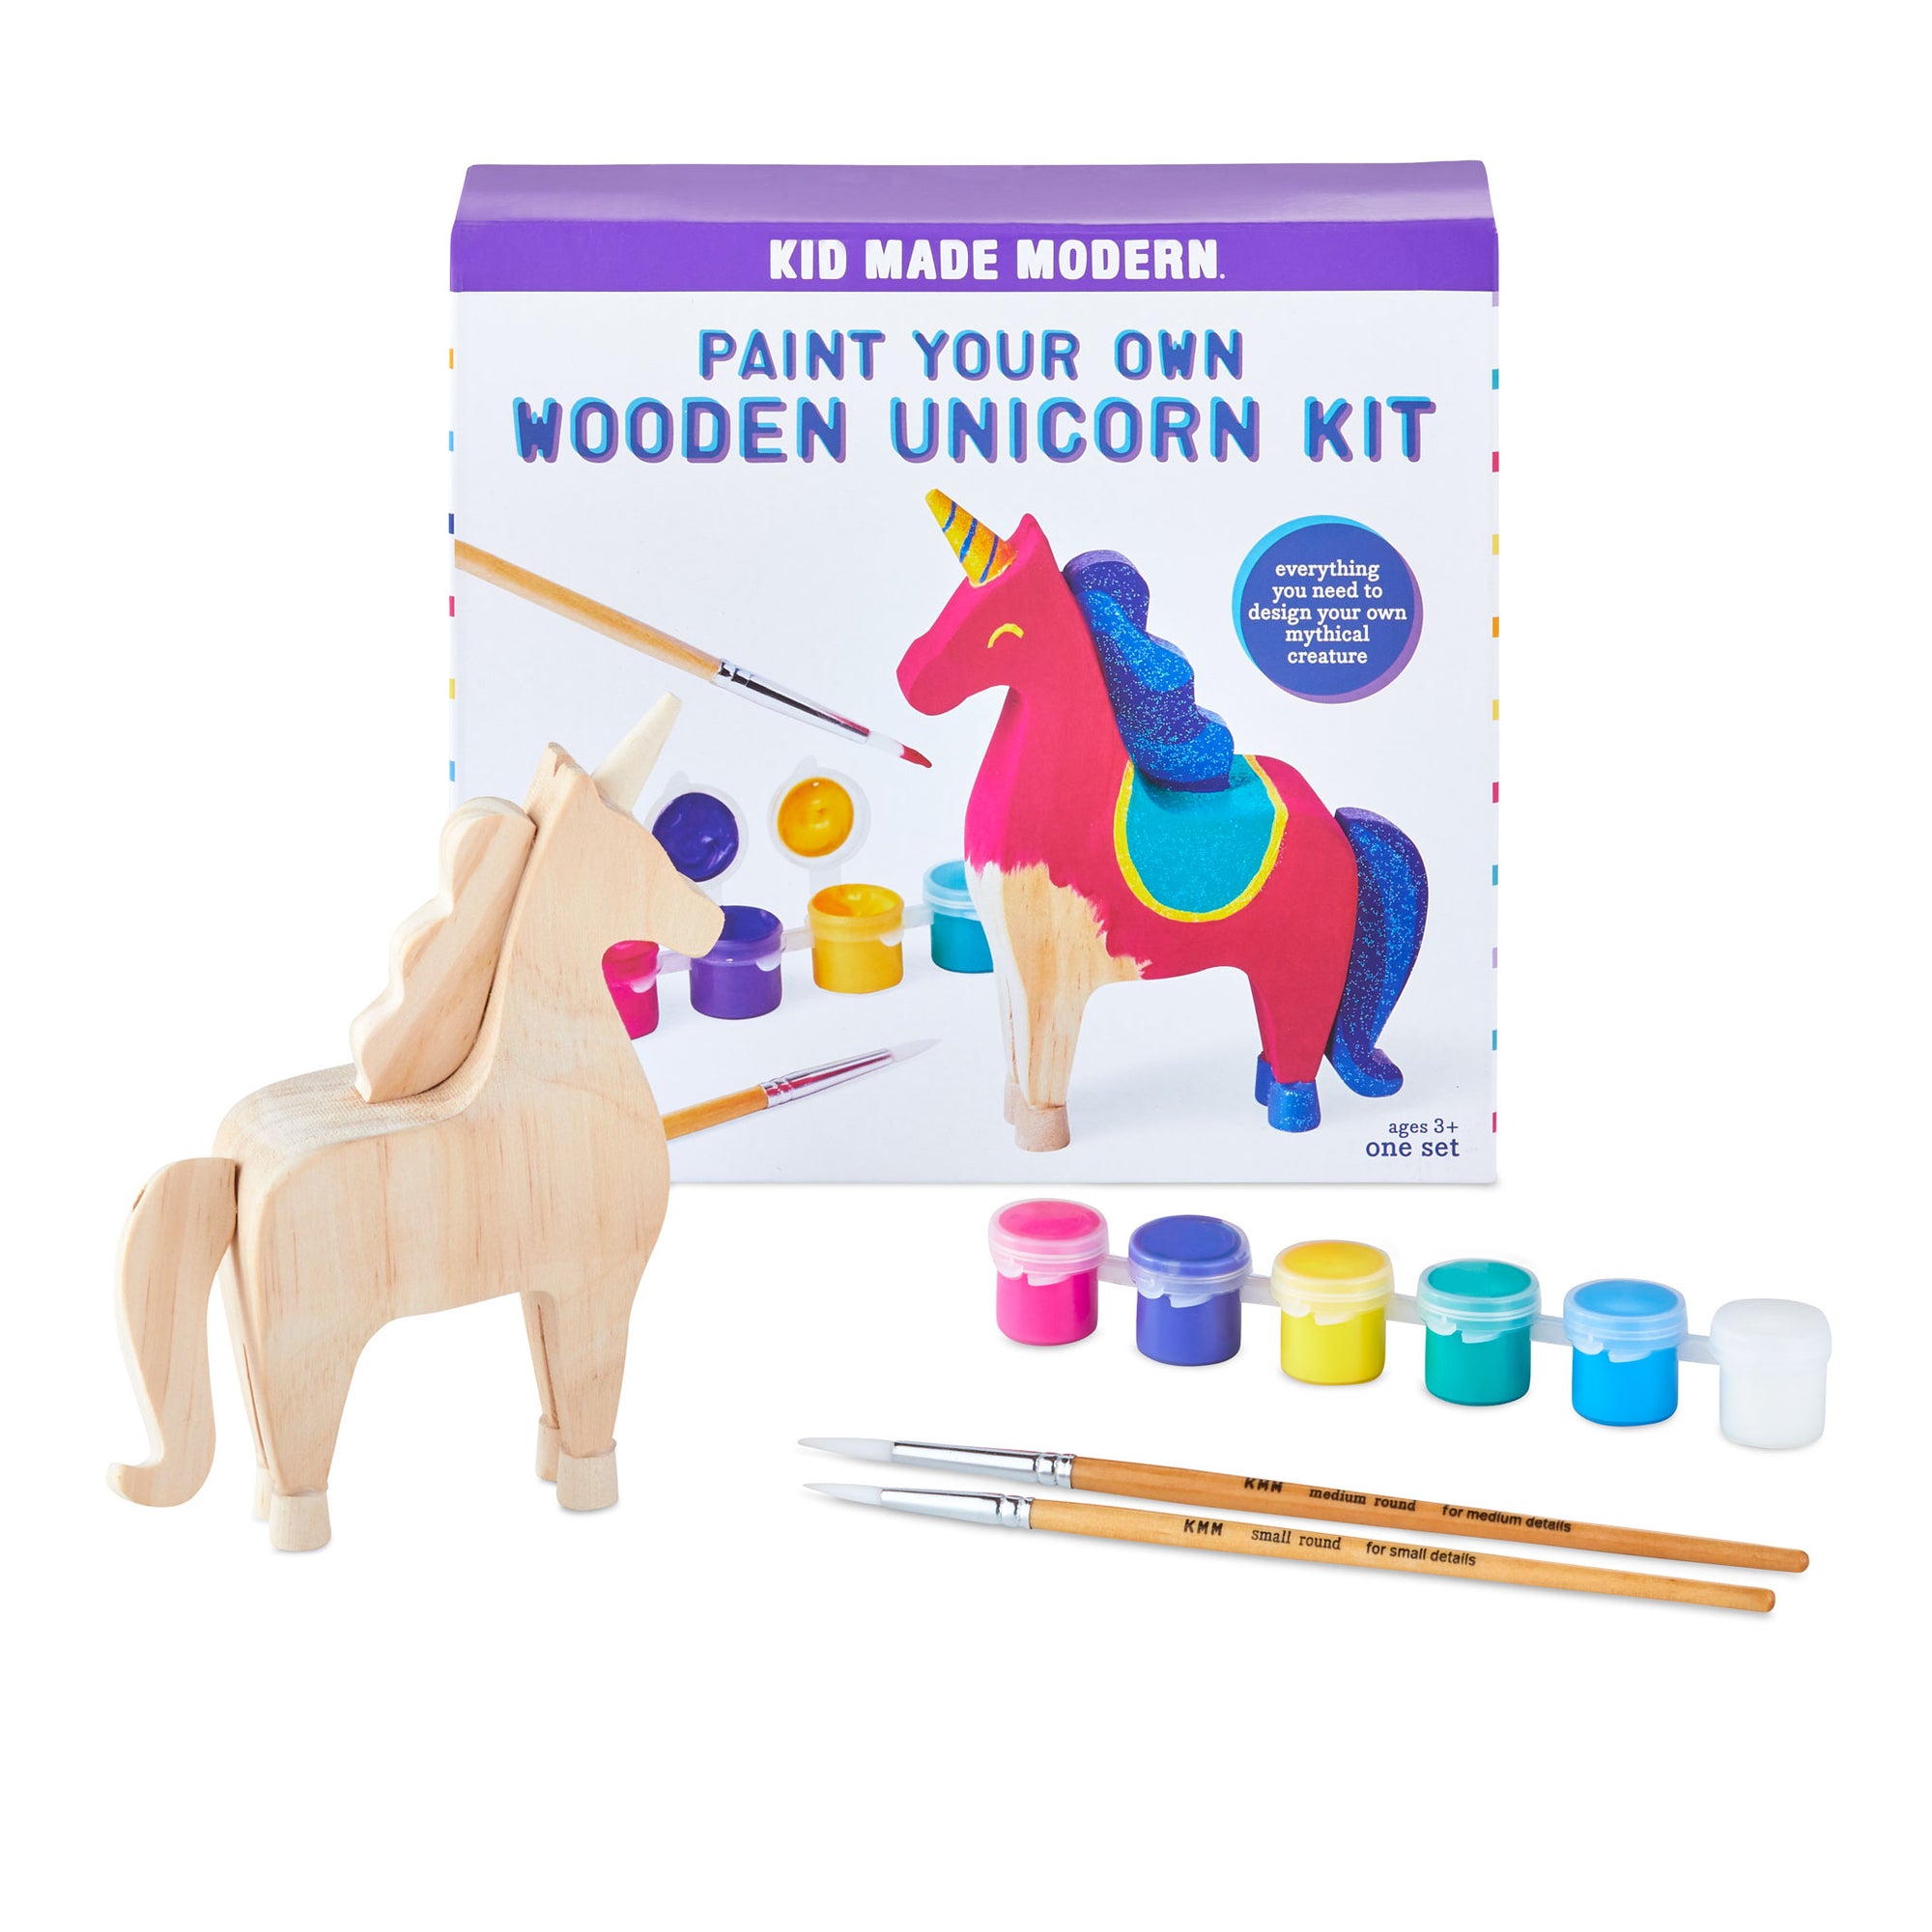 Paint Your Own Wooden Unicorn Kit Large